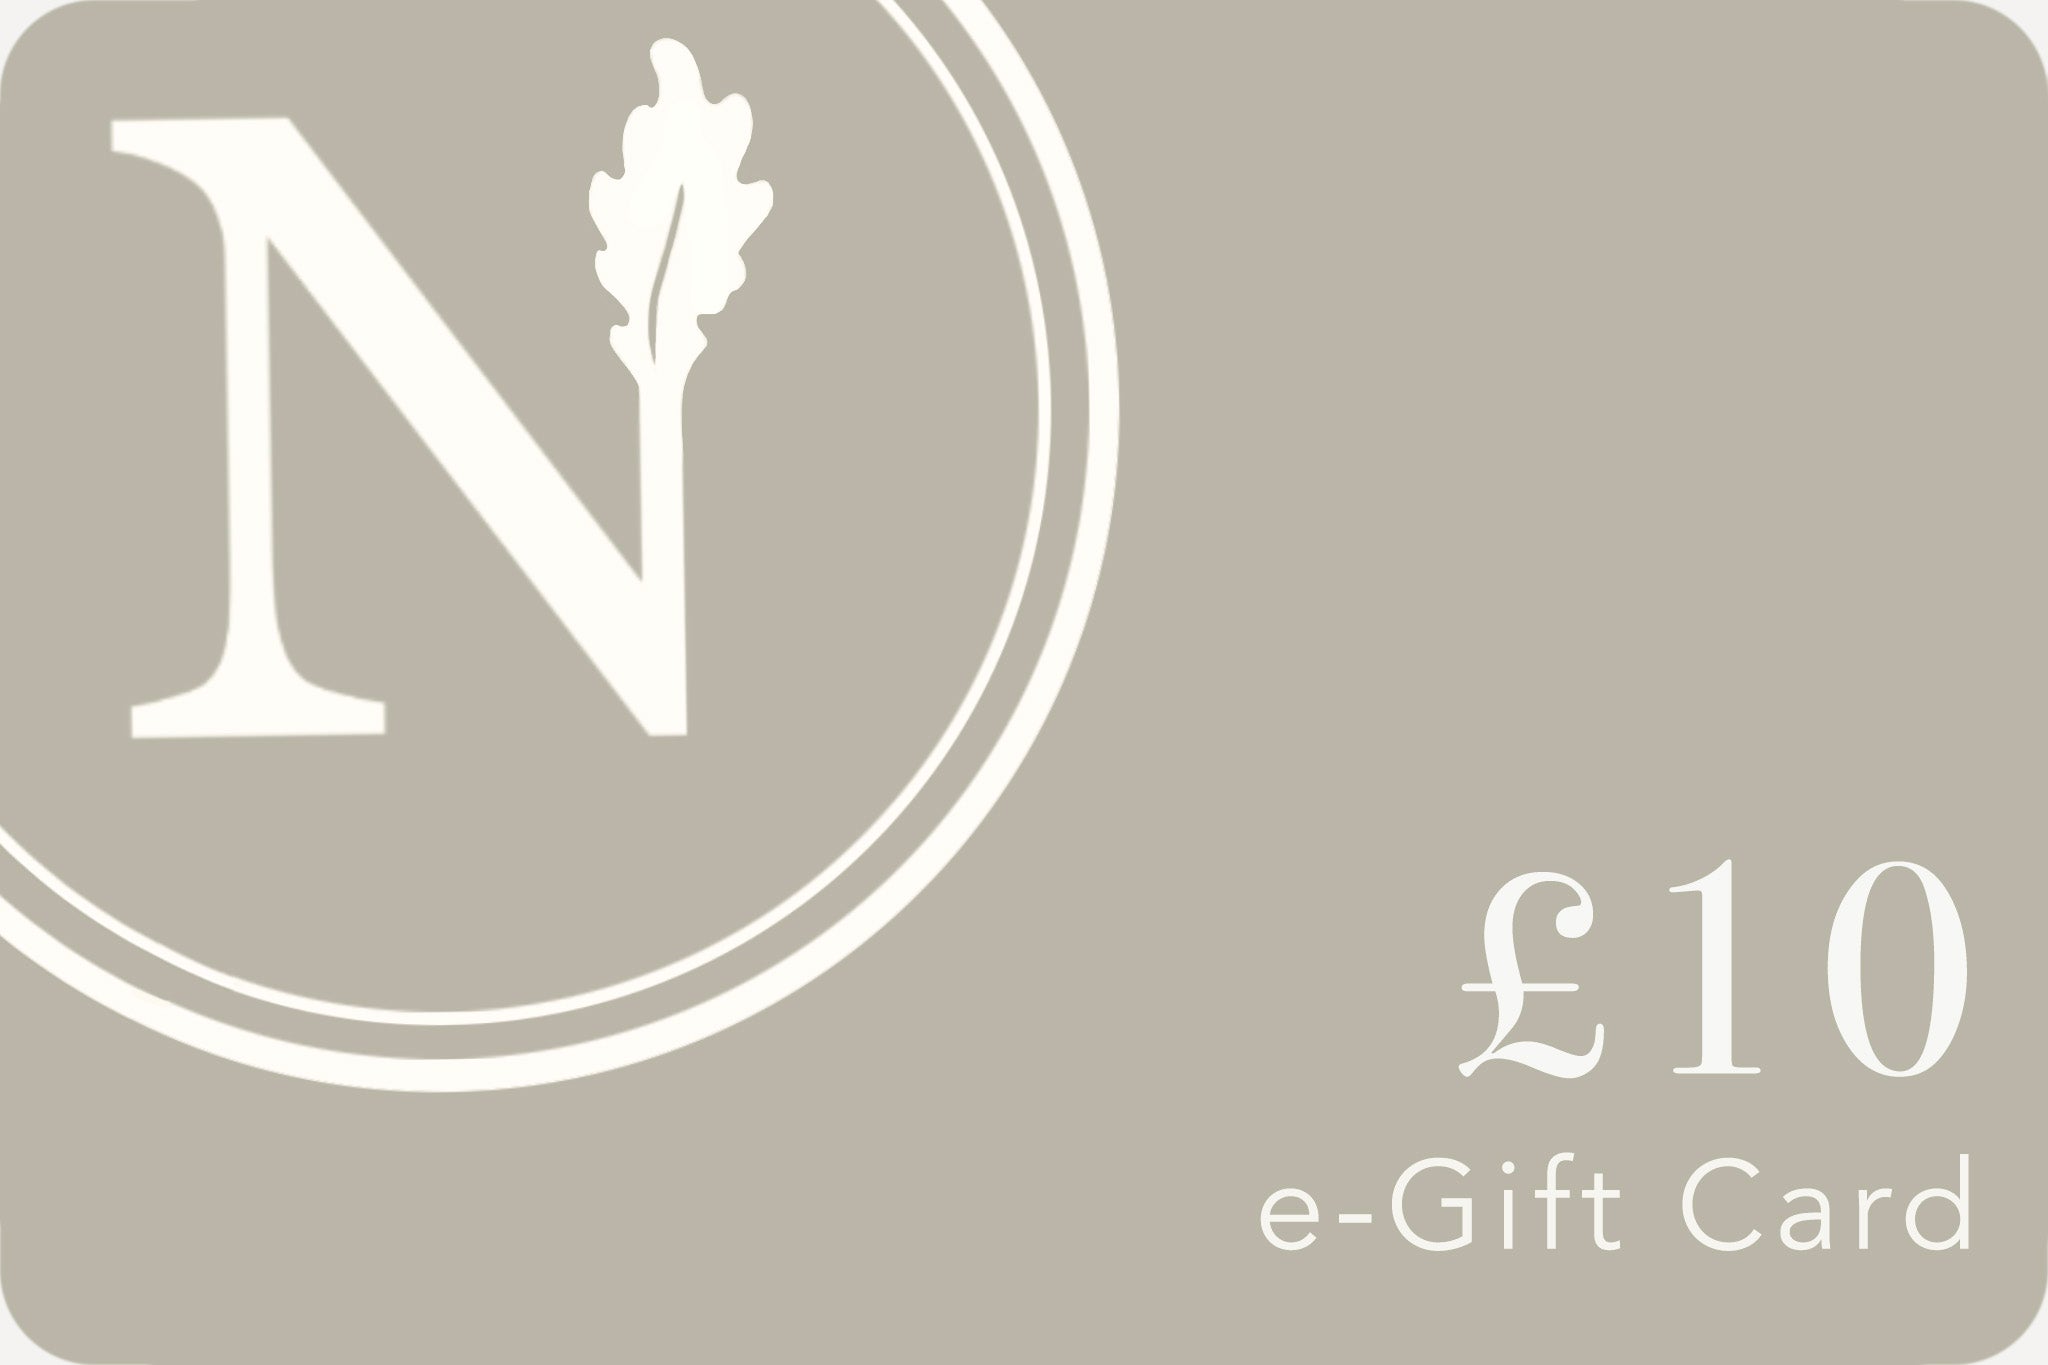 Nestie gift card £10